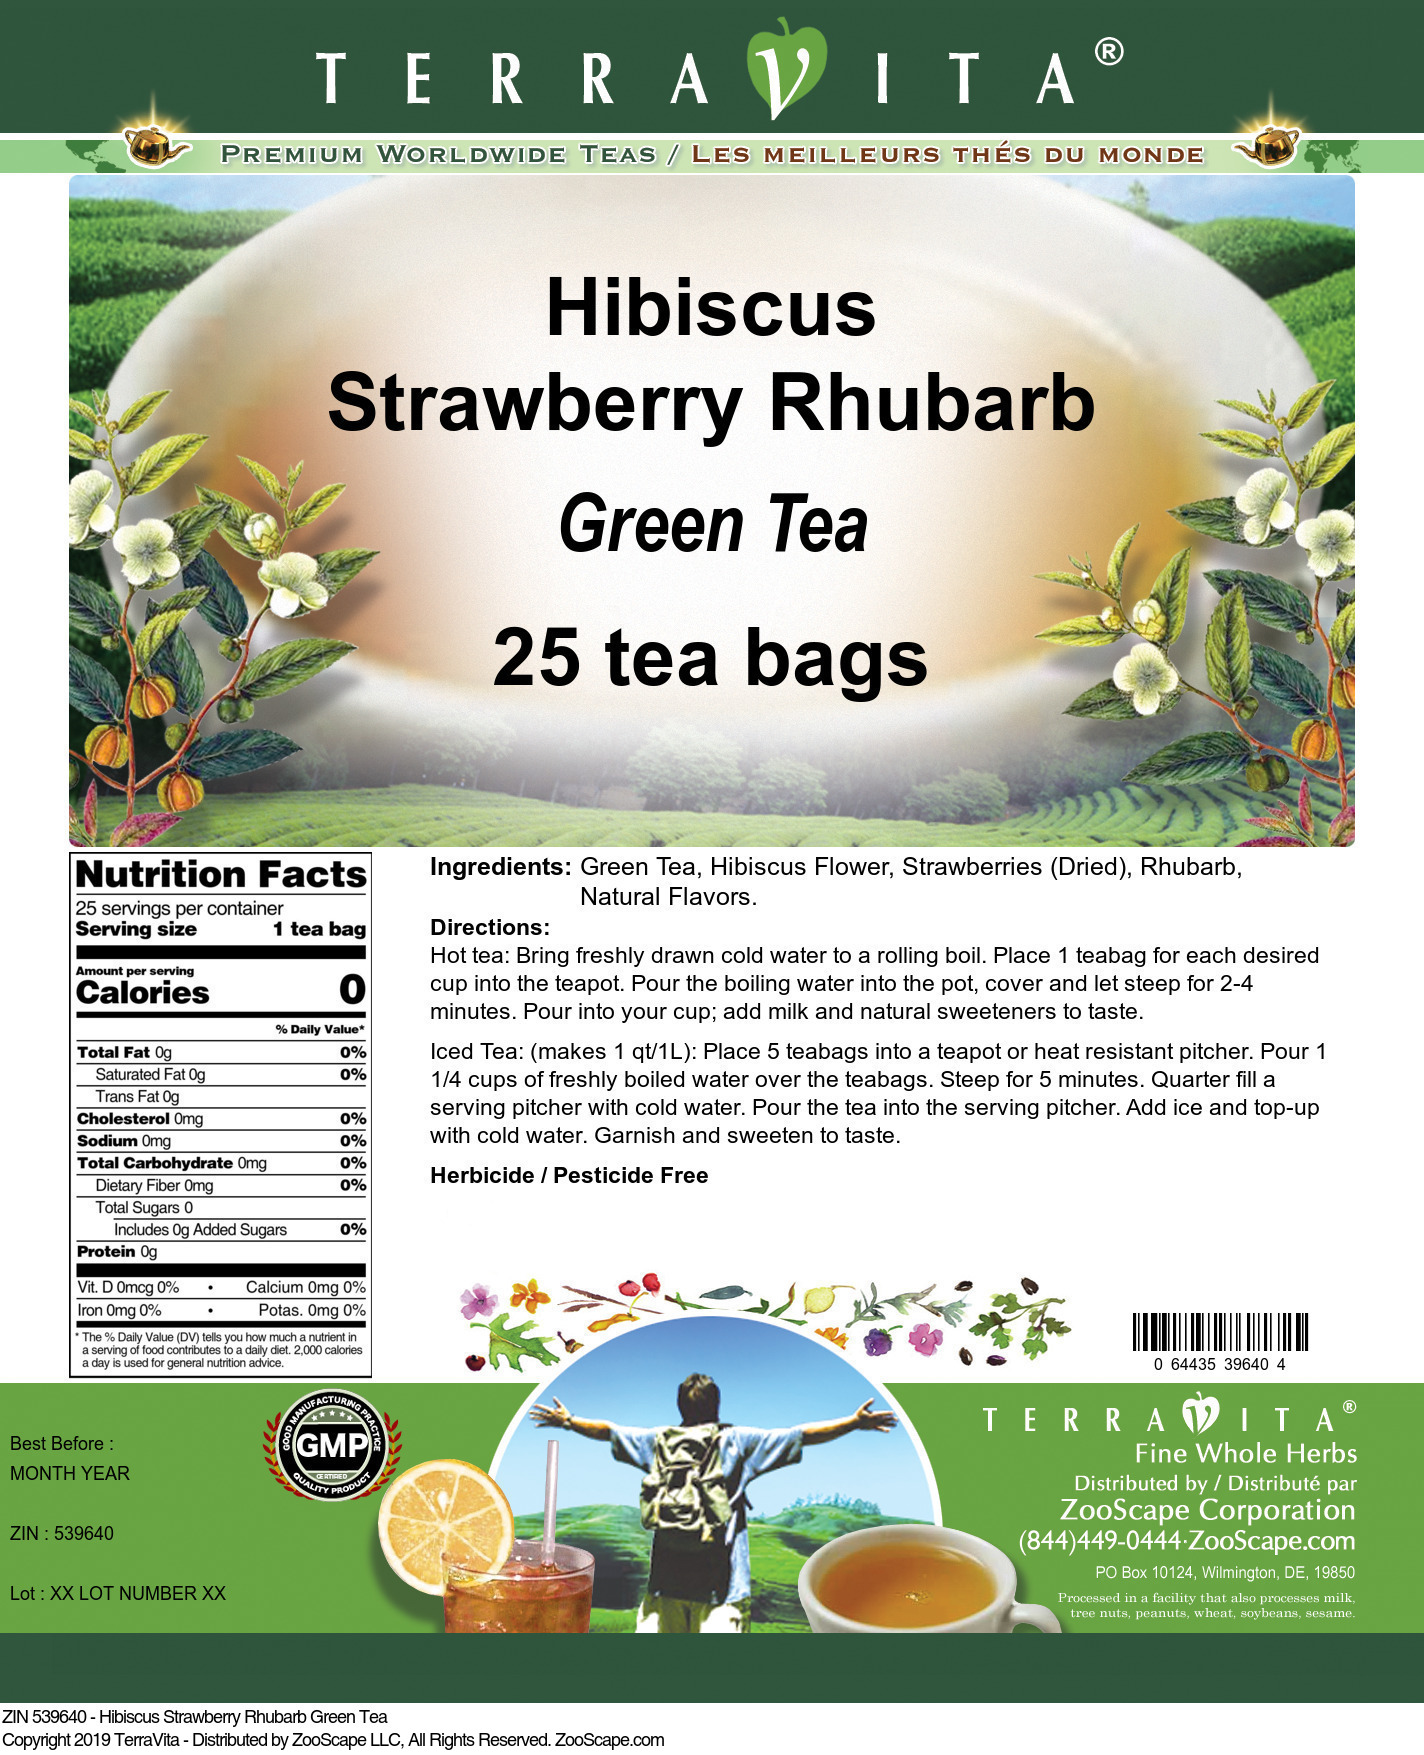 Hibiscus Strawberry Rhubarb Green Tea - Label